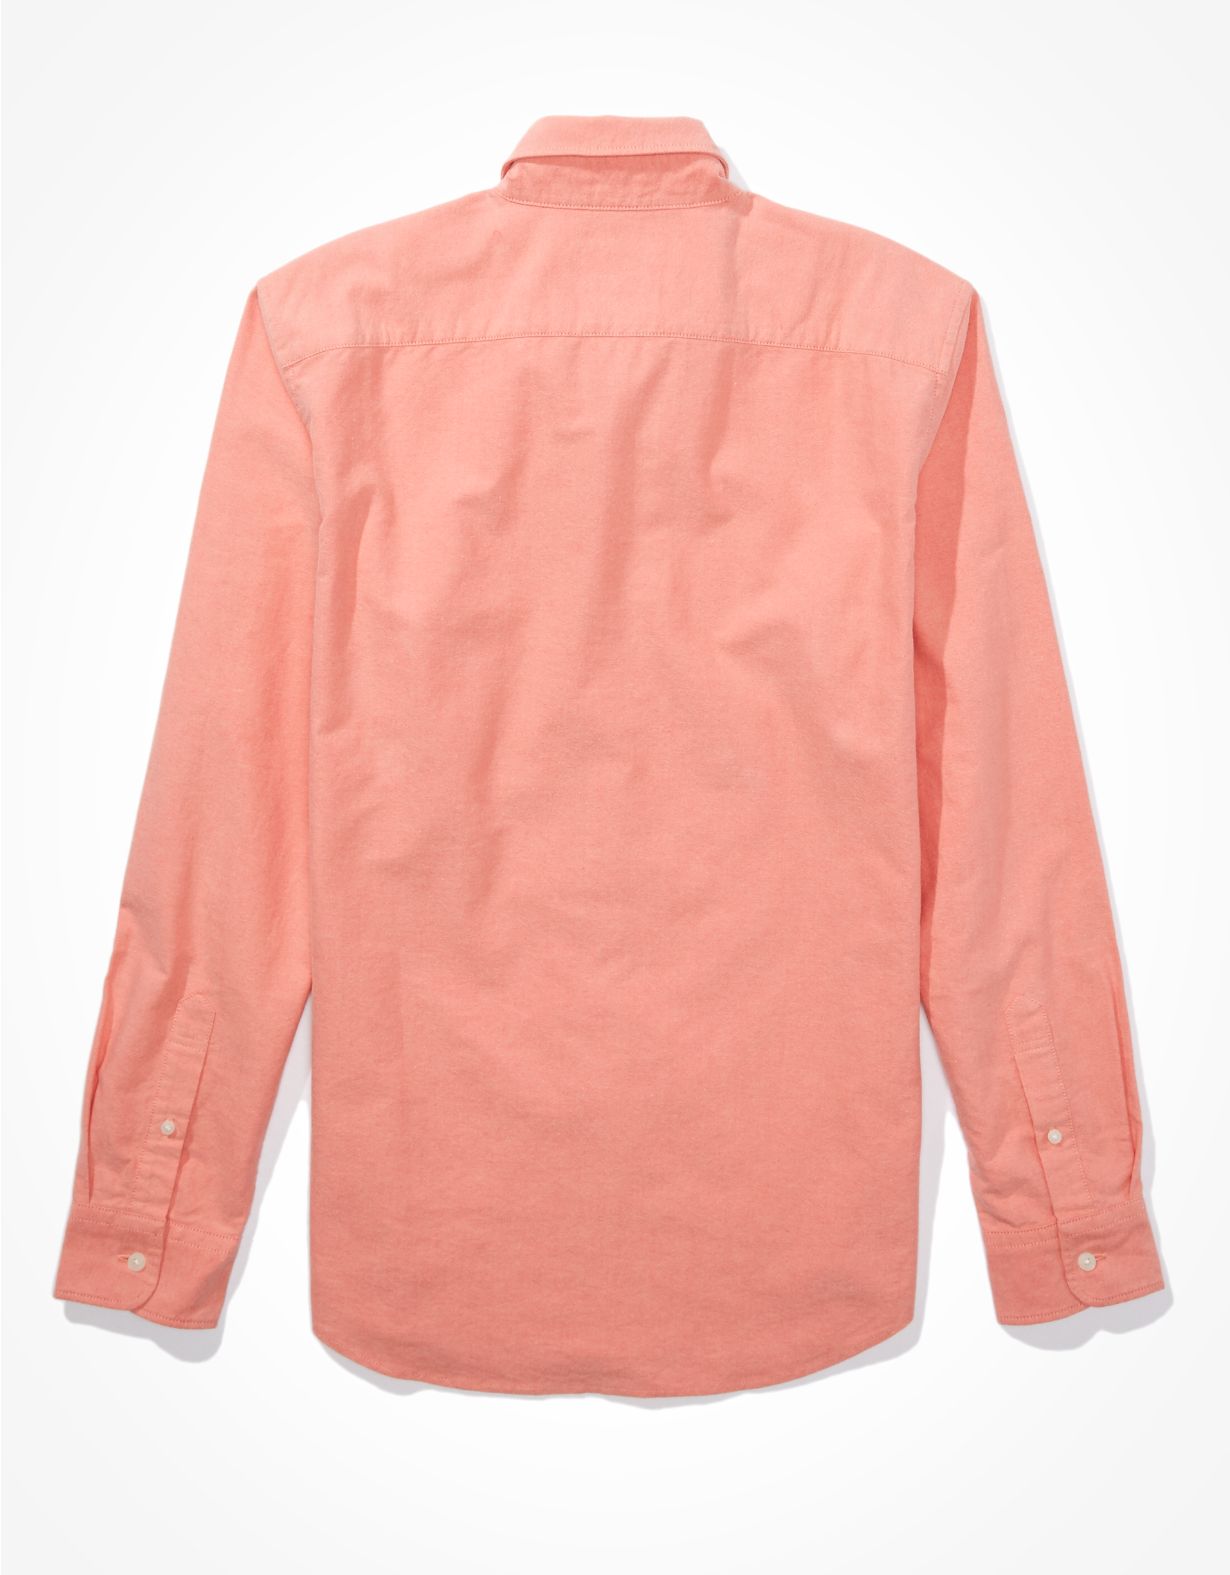 AE Oxford Button-Up Shirt